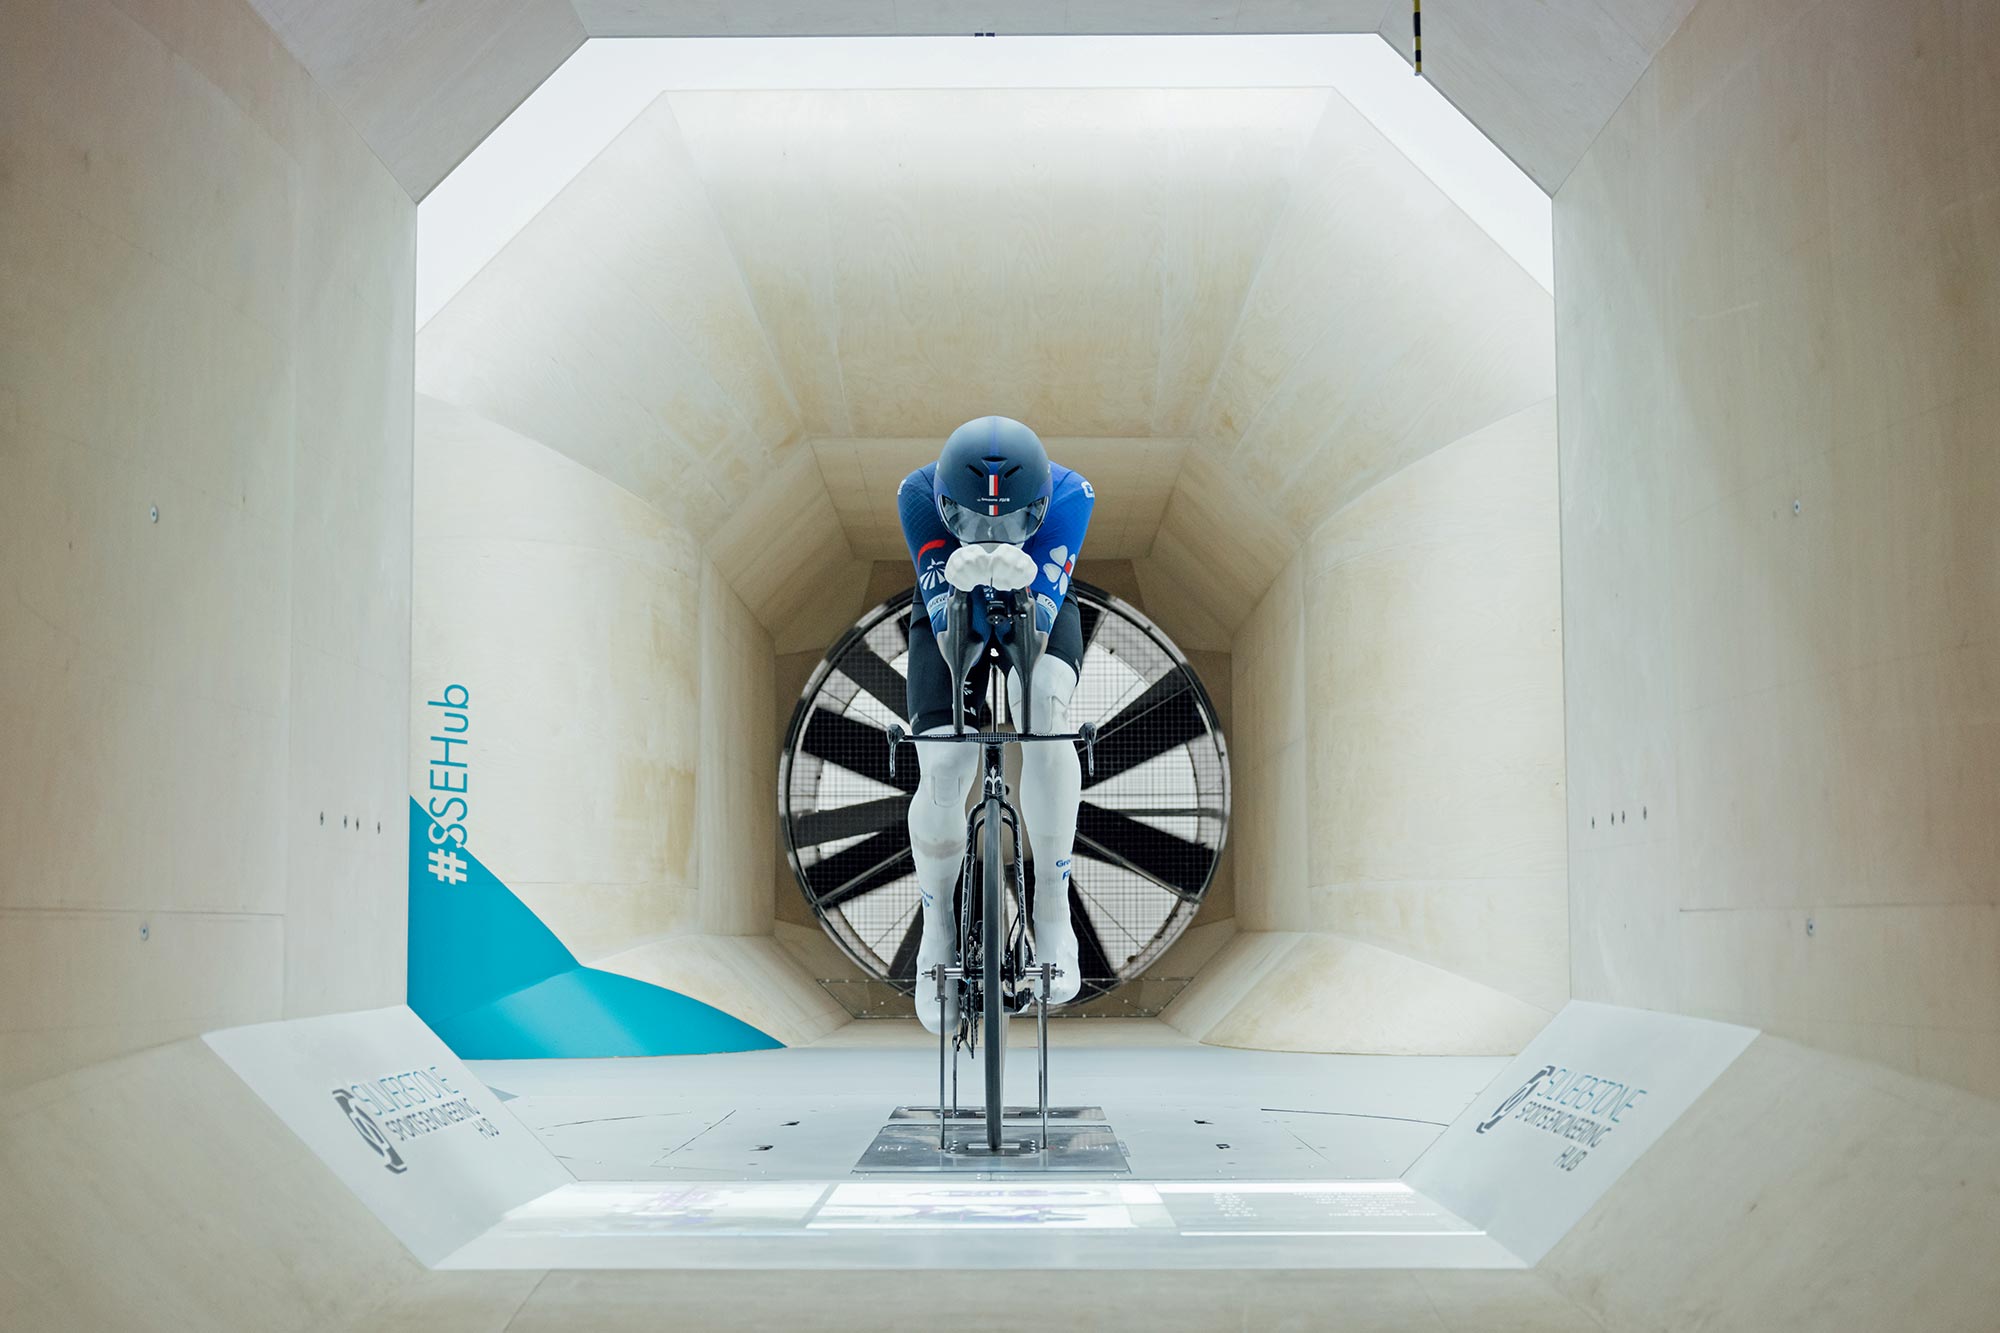 WiIier Supersonica SLR aero carbon time trial bike, Silverstone wind tunnel